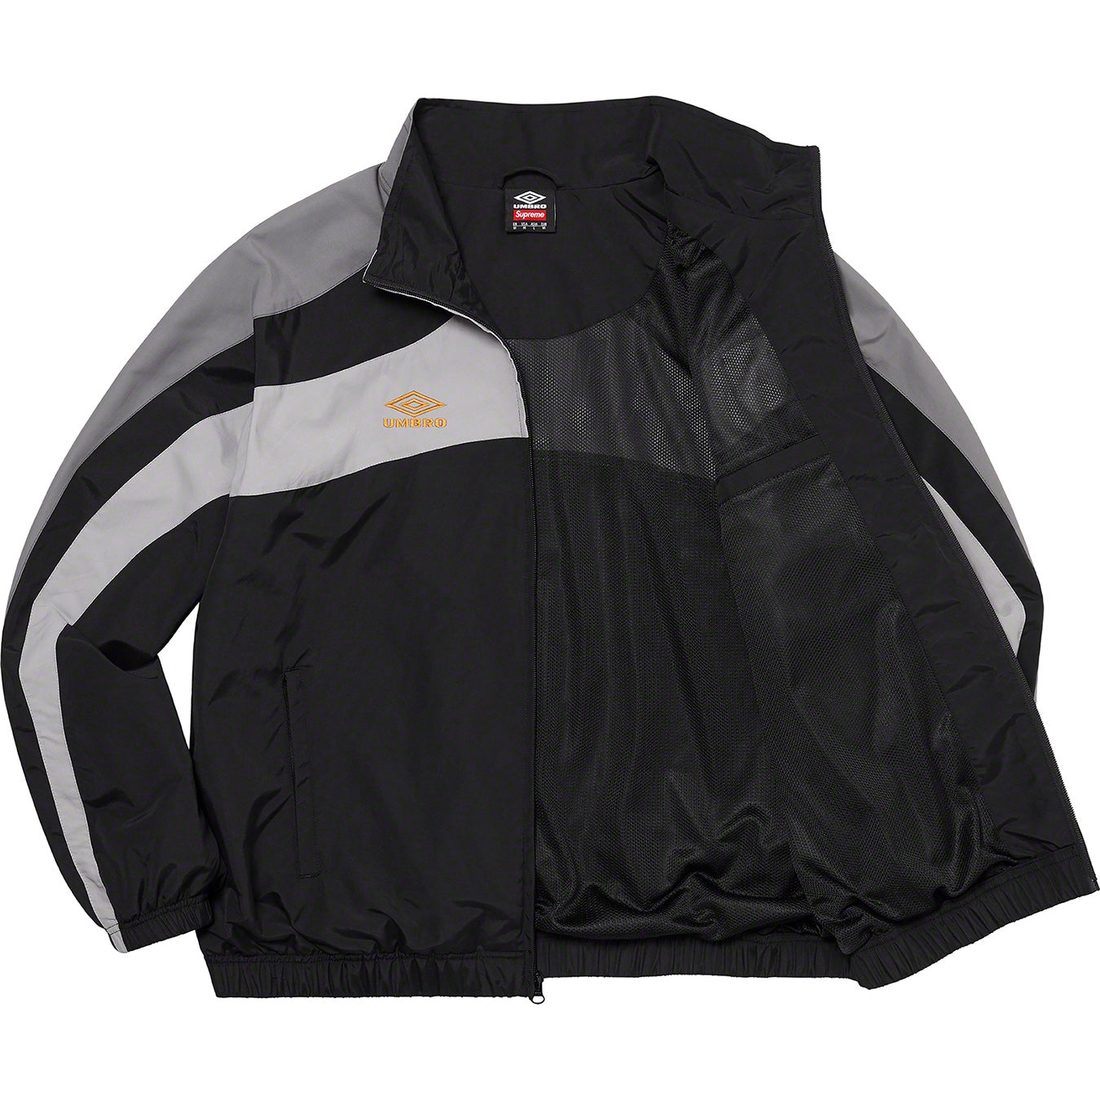 Details on Supreme Umbro Track Jacket Black from spring summer 2023 (Price is $188)